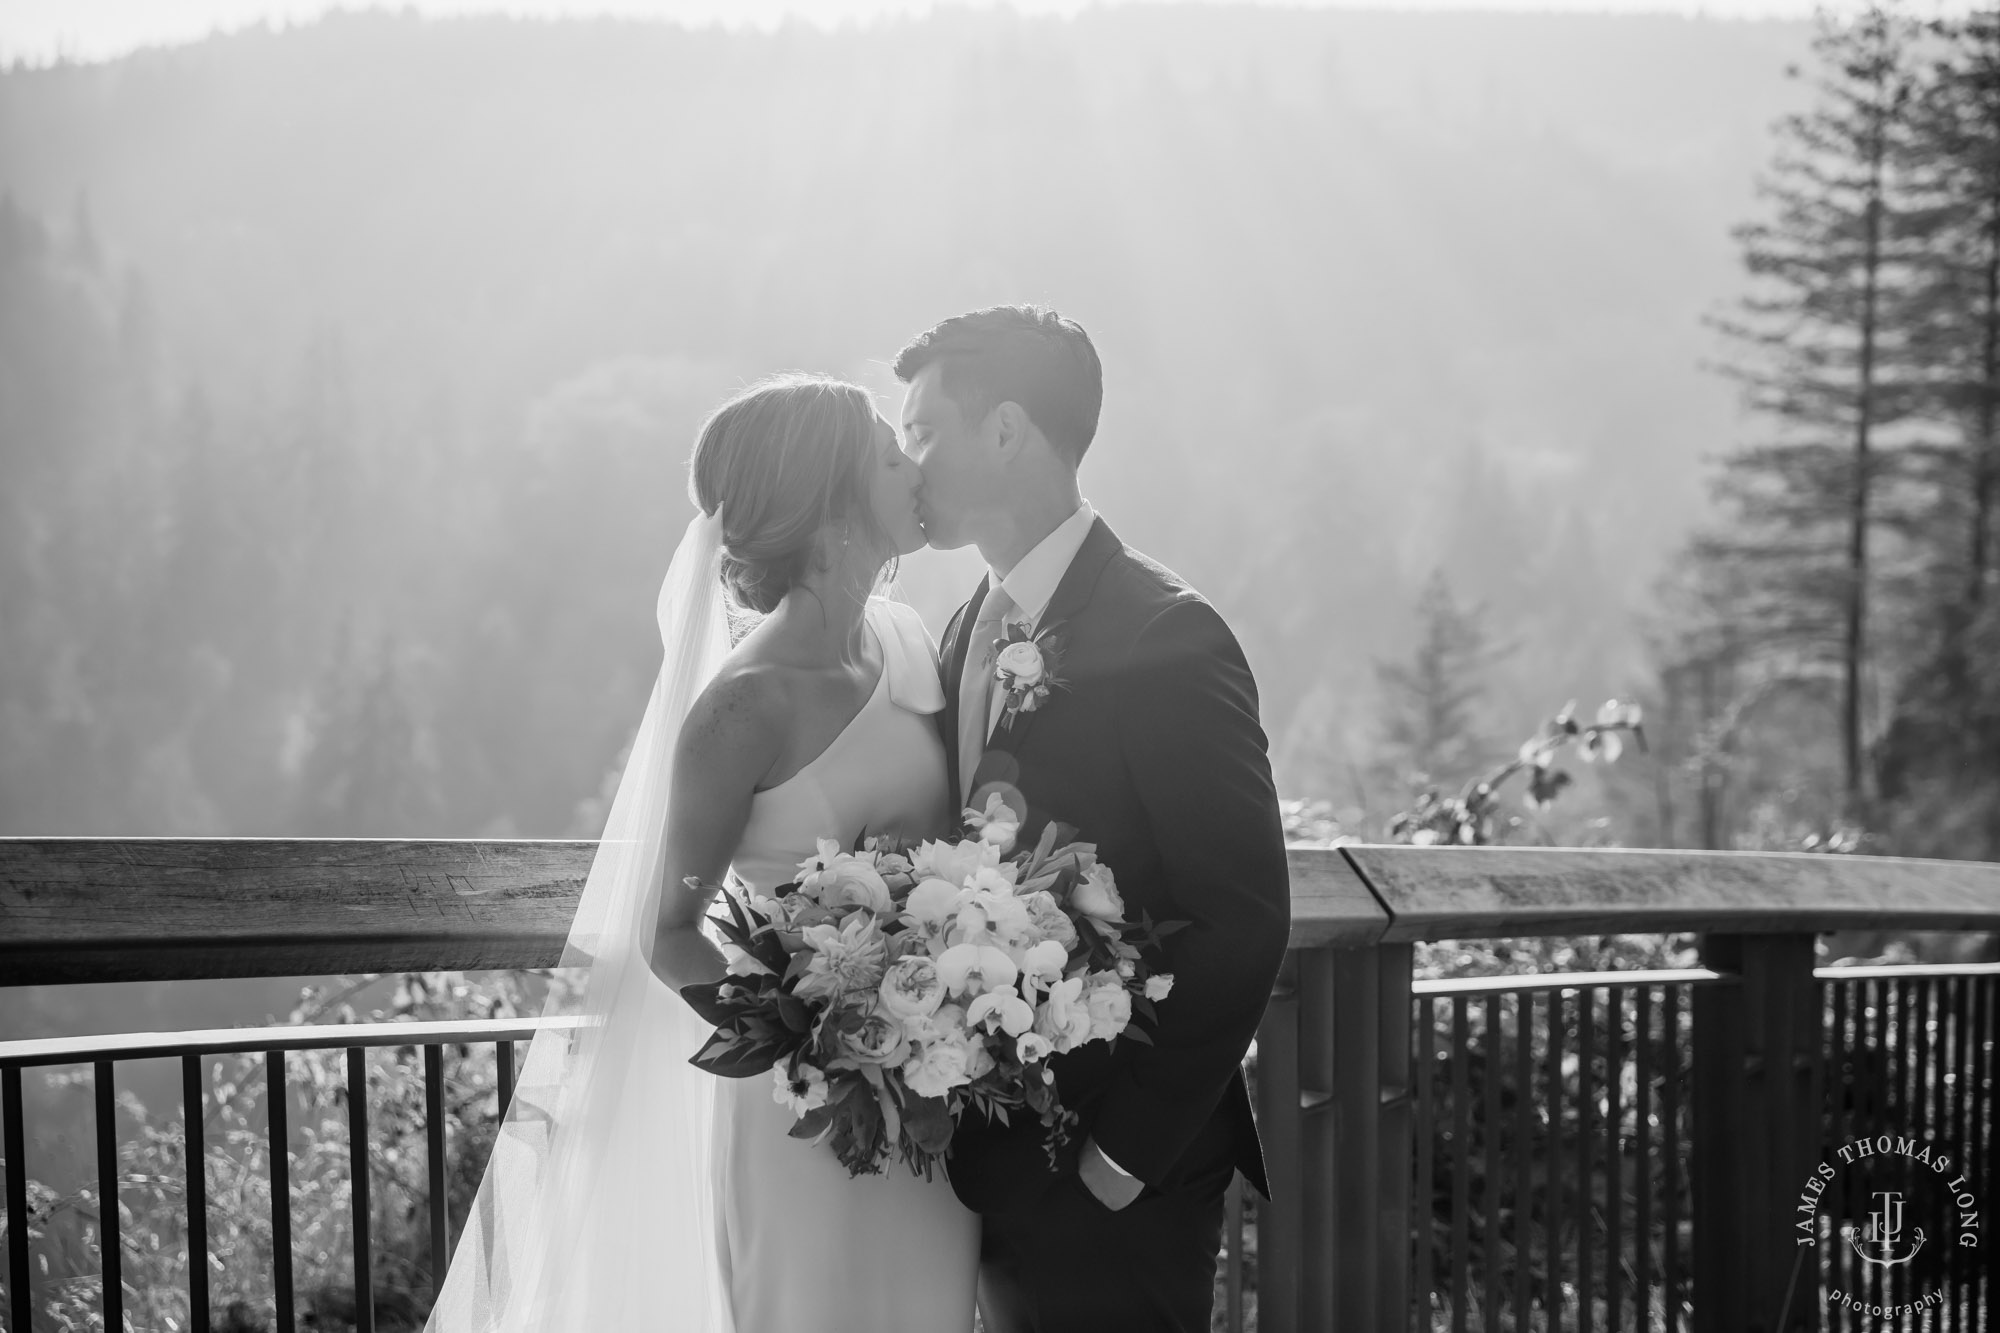 Salish Lodge Snoqualmie wedding by Snoqualmie wedding photographer James Thomas Long Photography